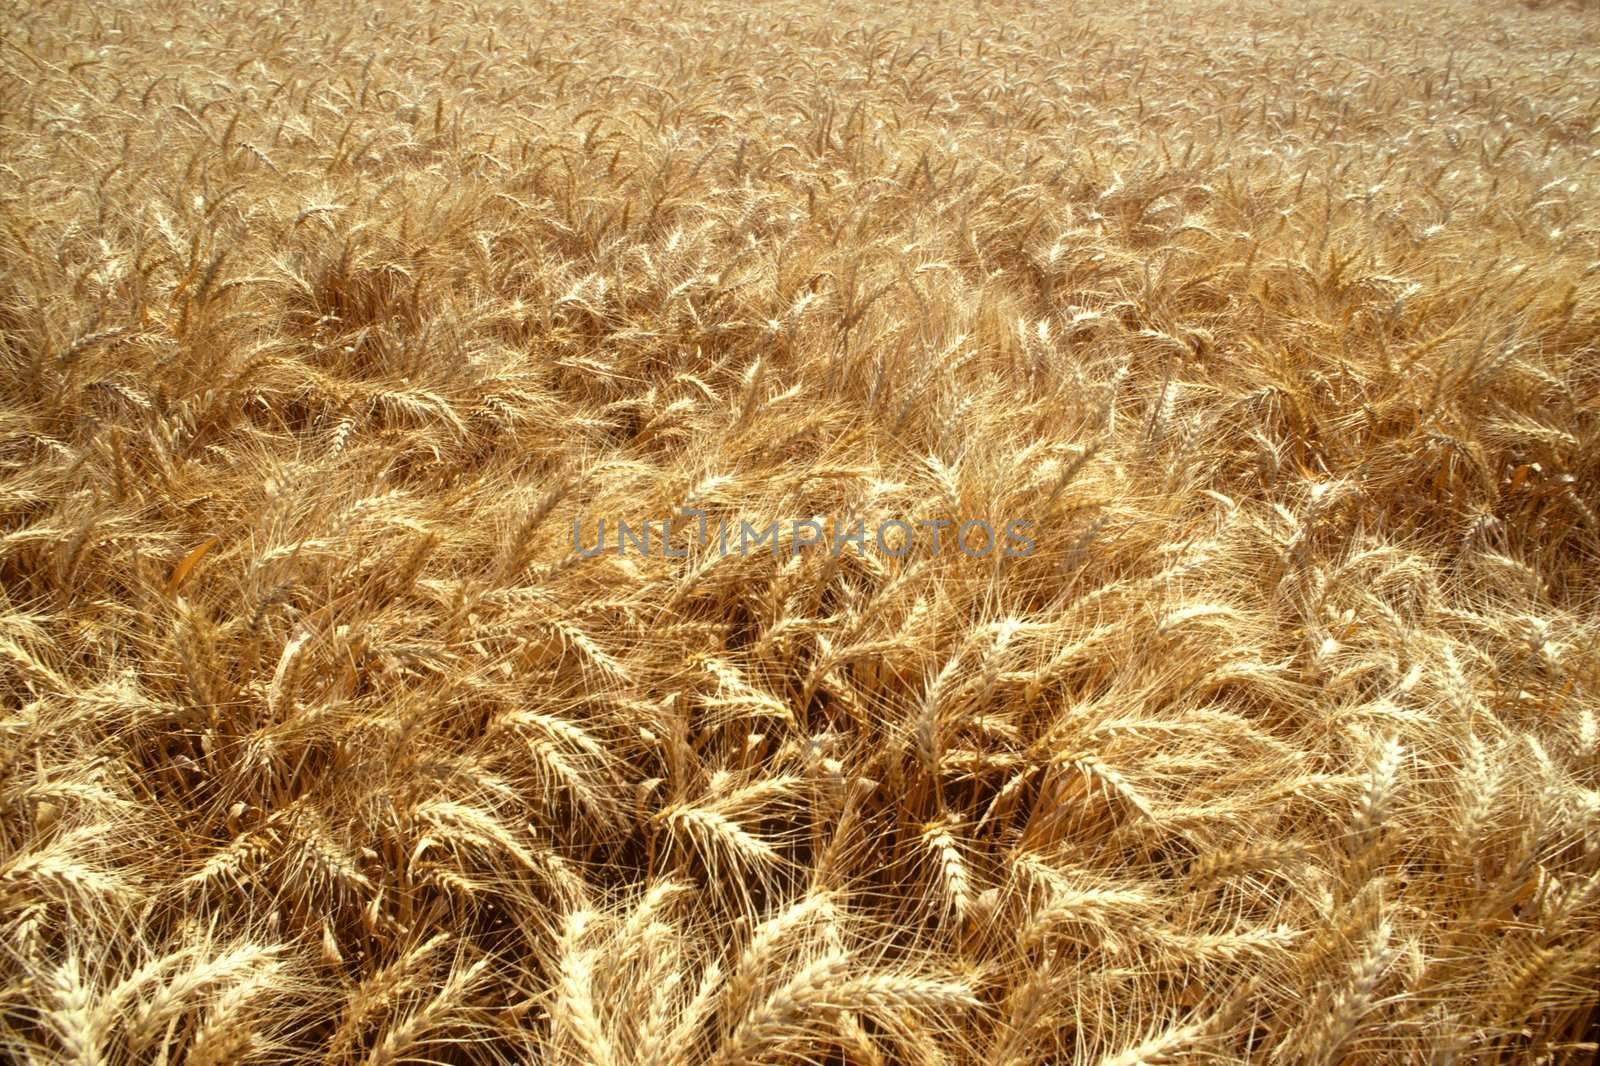 Field of golden wheat plants Horizontal